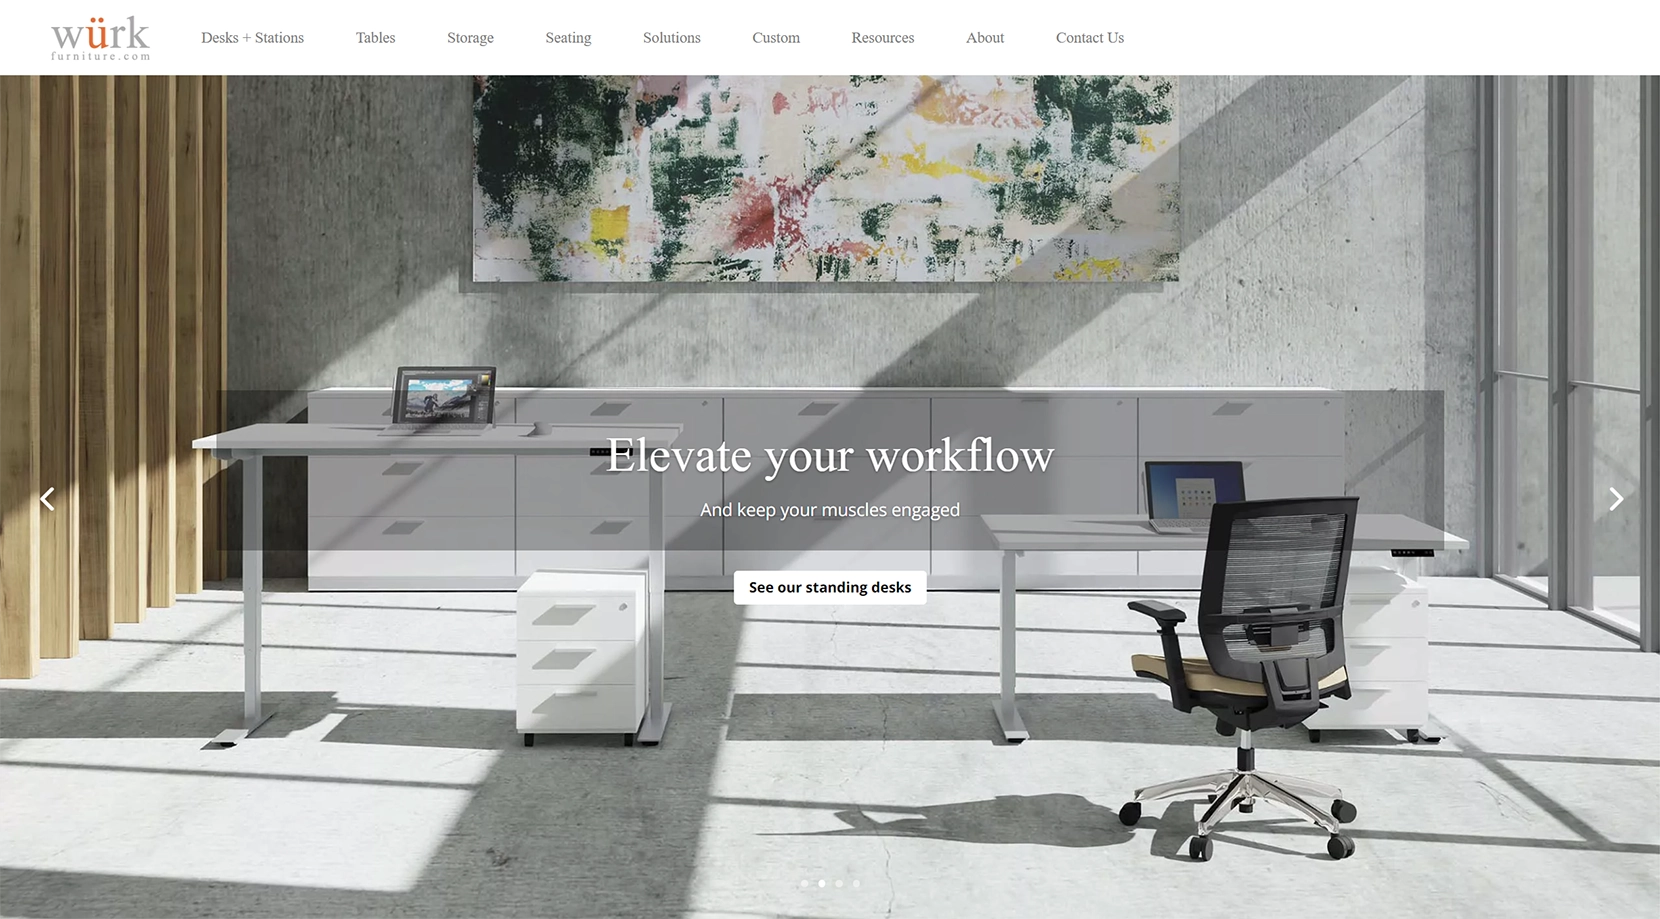 A website design for a furniture store.